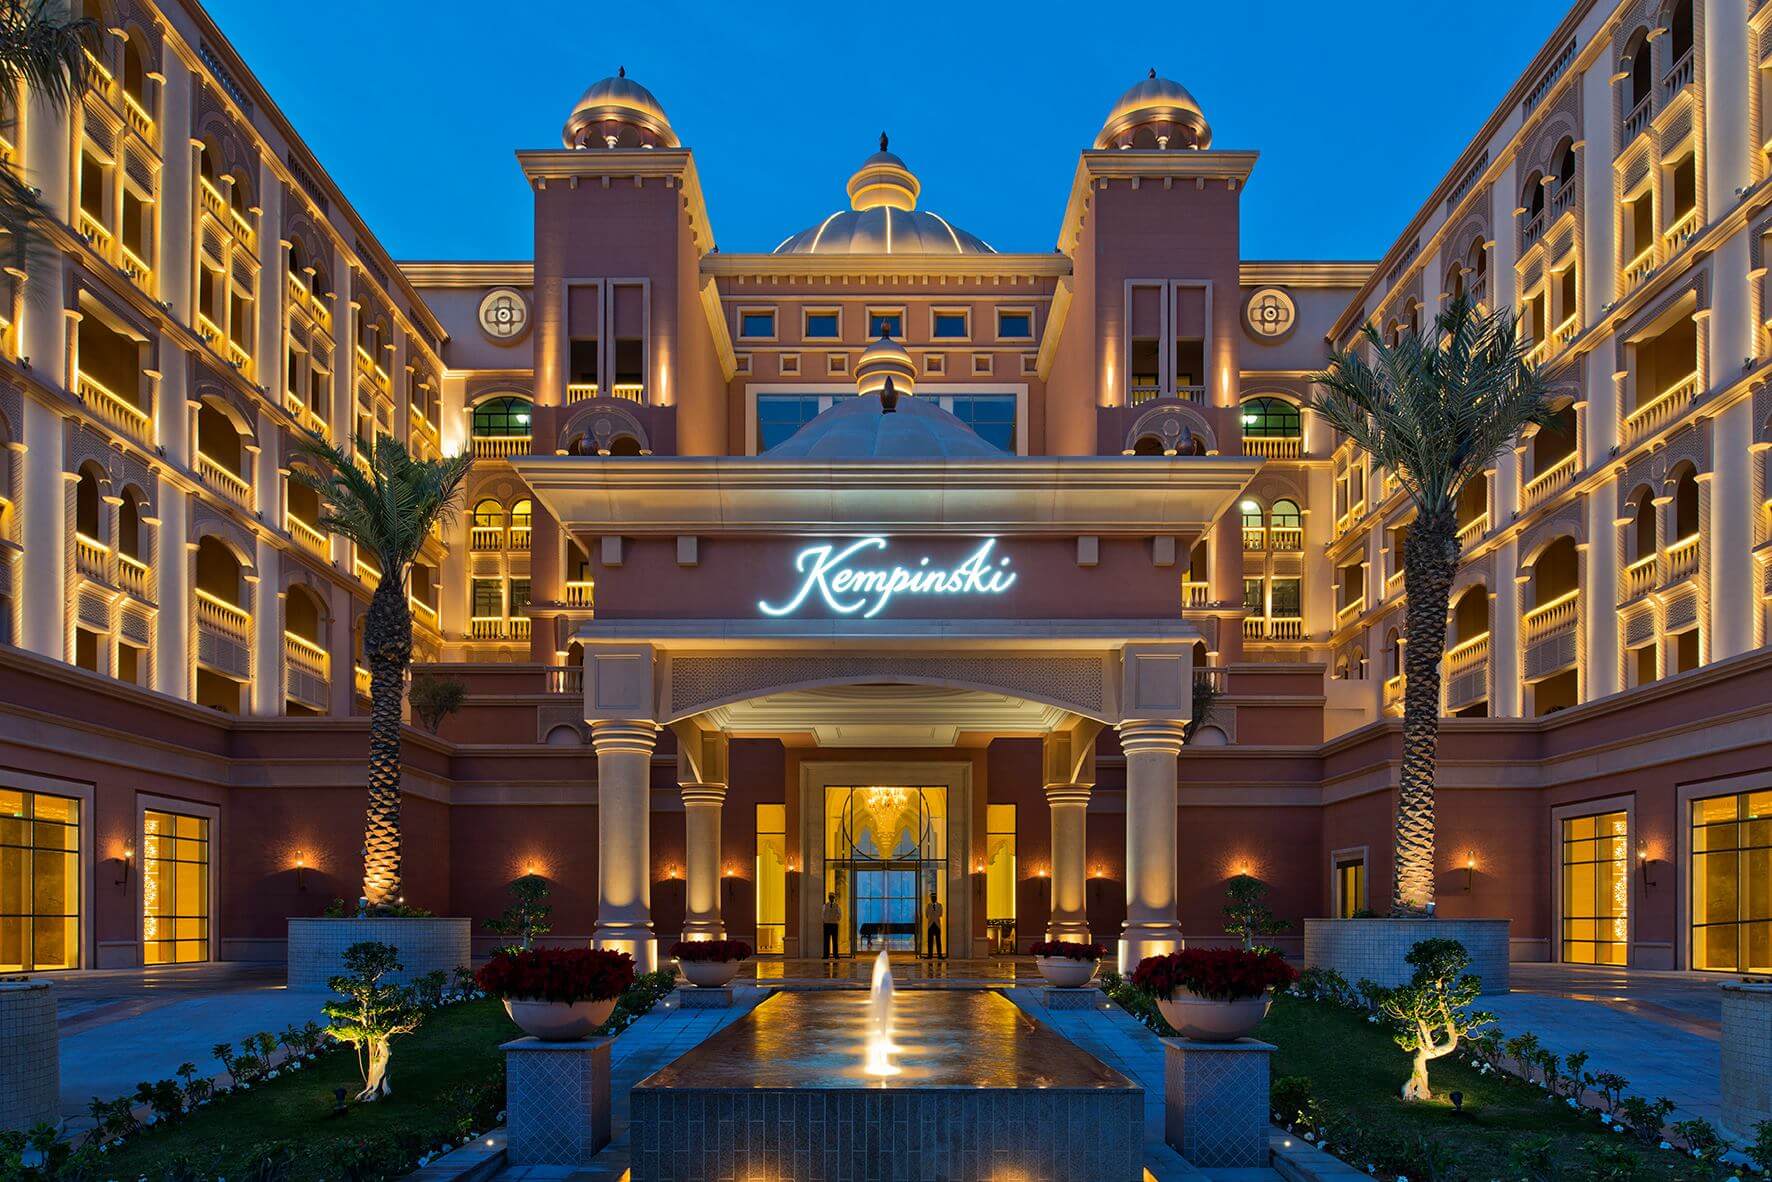 Hotel. Отель Кемпинский Катар. Кемпински отель Доха. Гостиничная цепь Кемпински. Marsa Malaz Kempinski the Pearl Катар Doha.